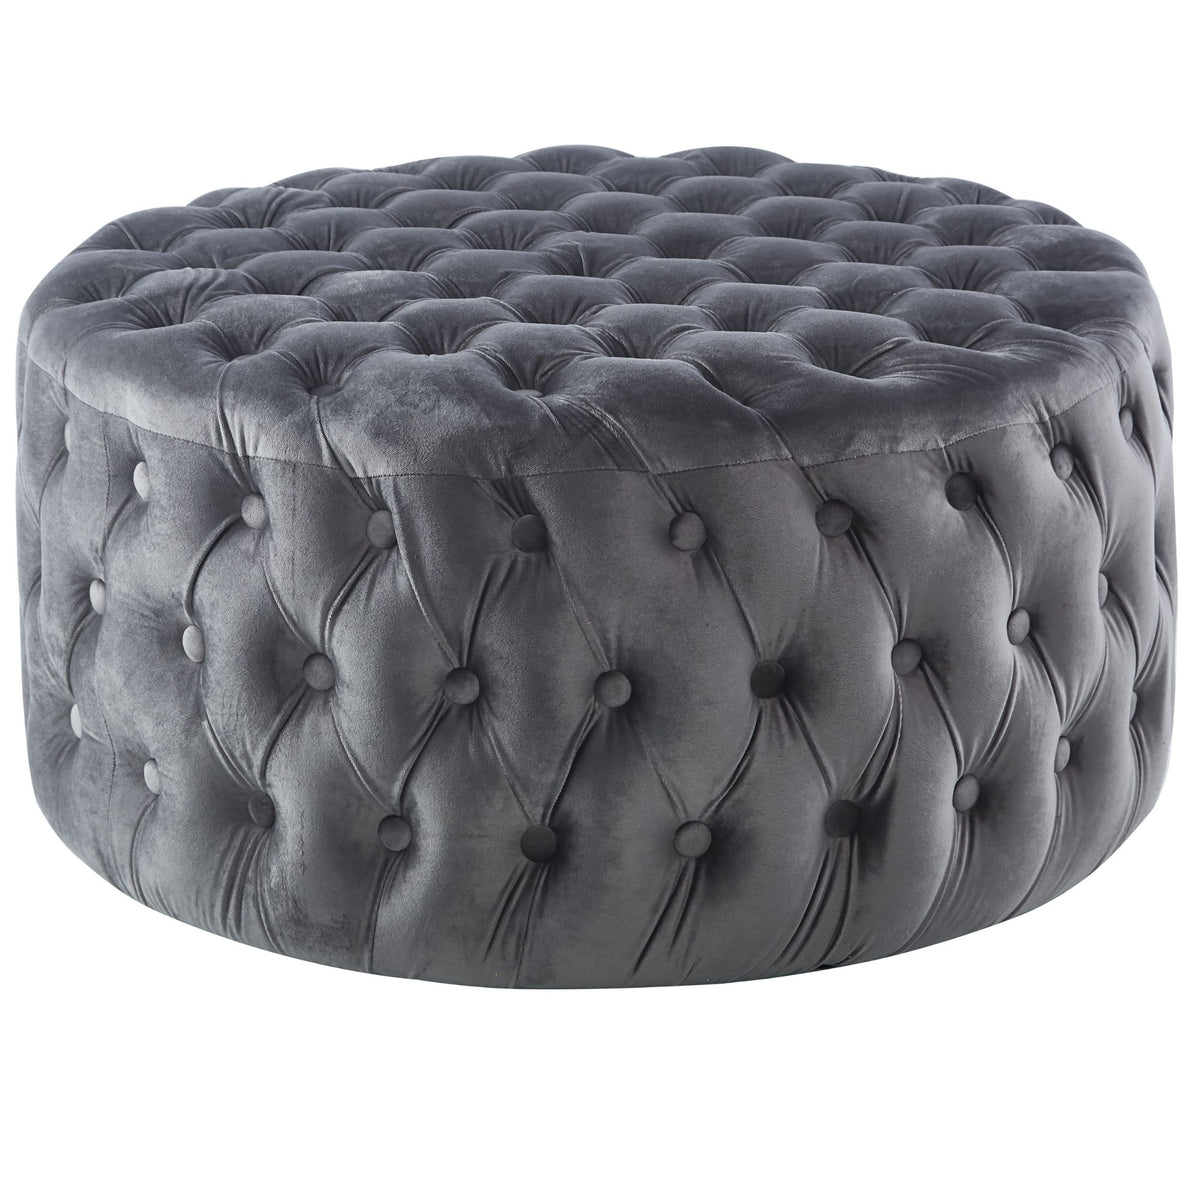 Uzona Tufted Velvet Fabric Round Ottoman Footstools - Grey - Notbrand